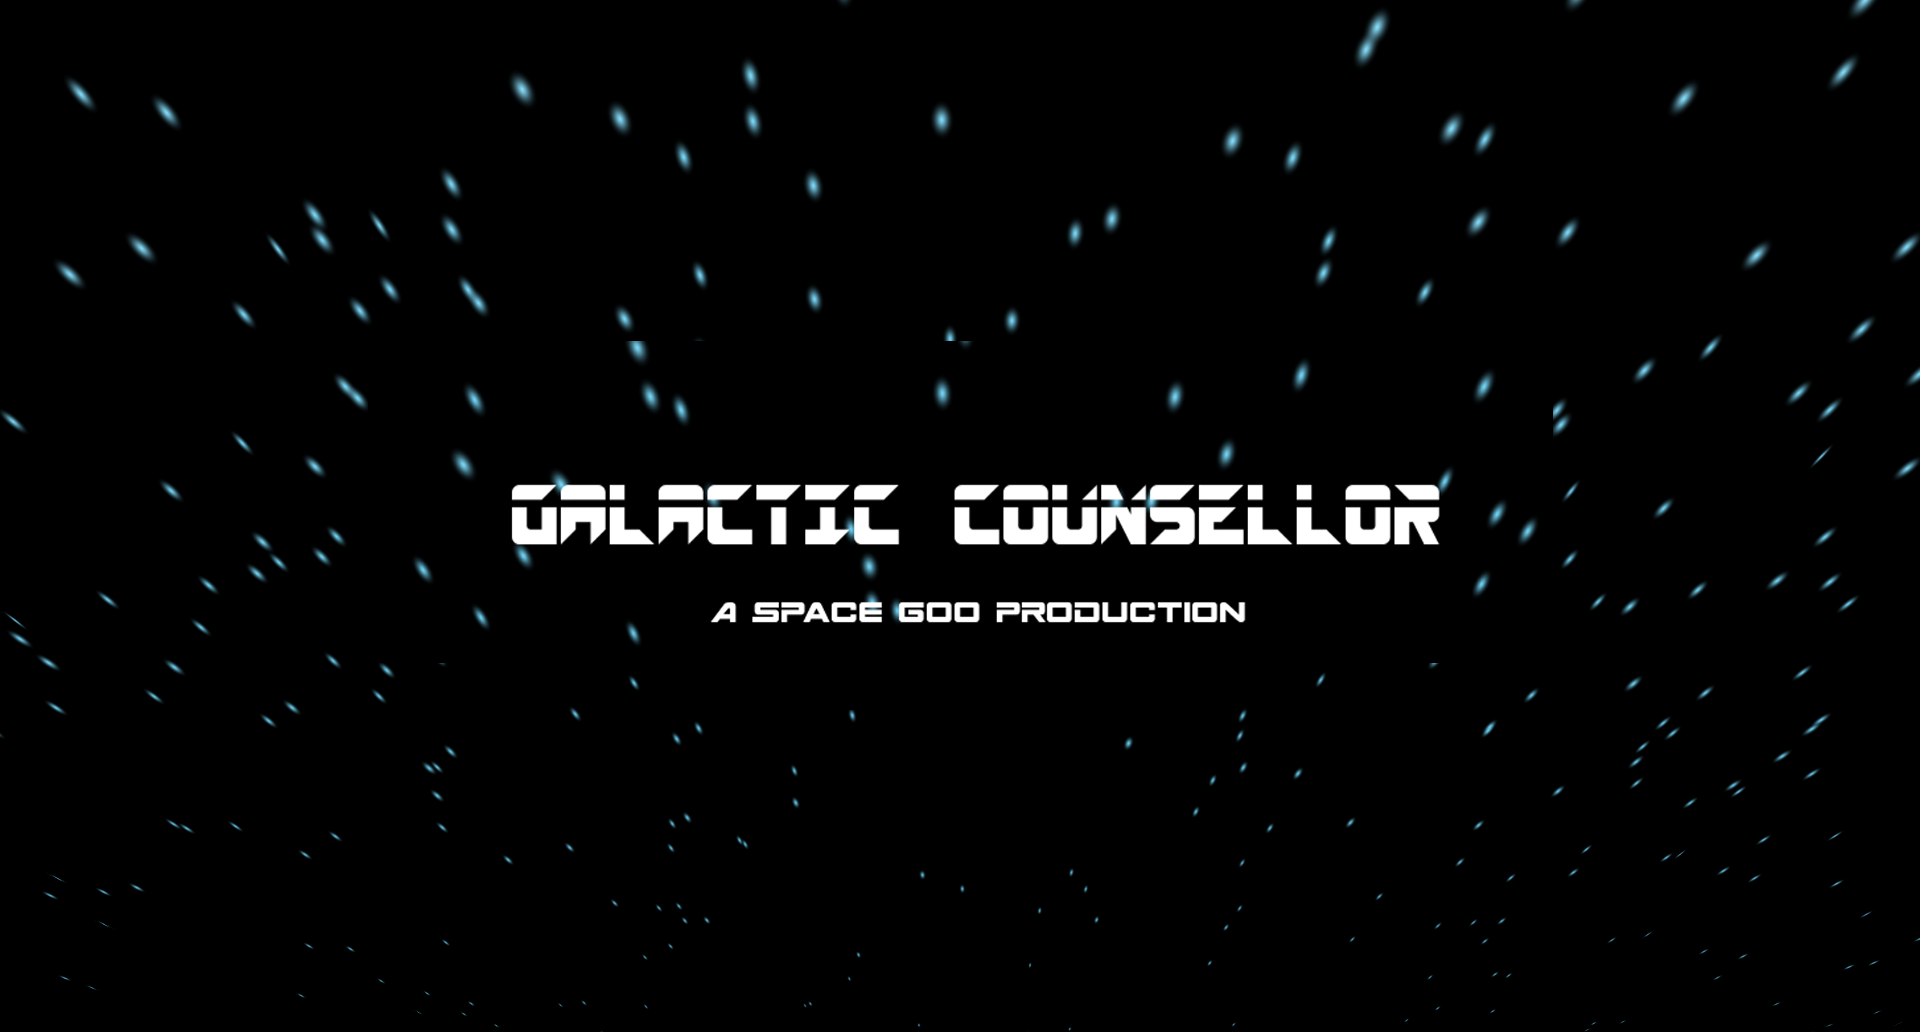 Galactic Counsellor